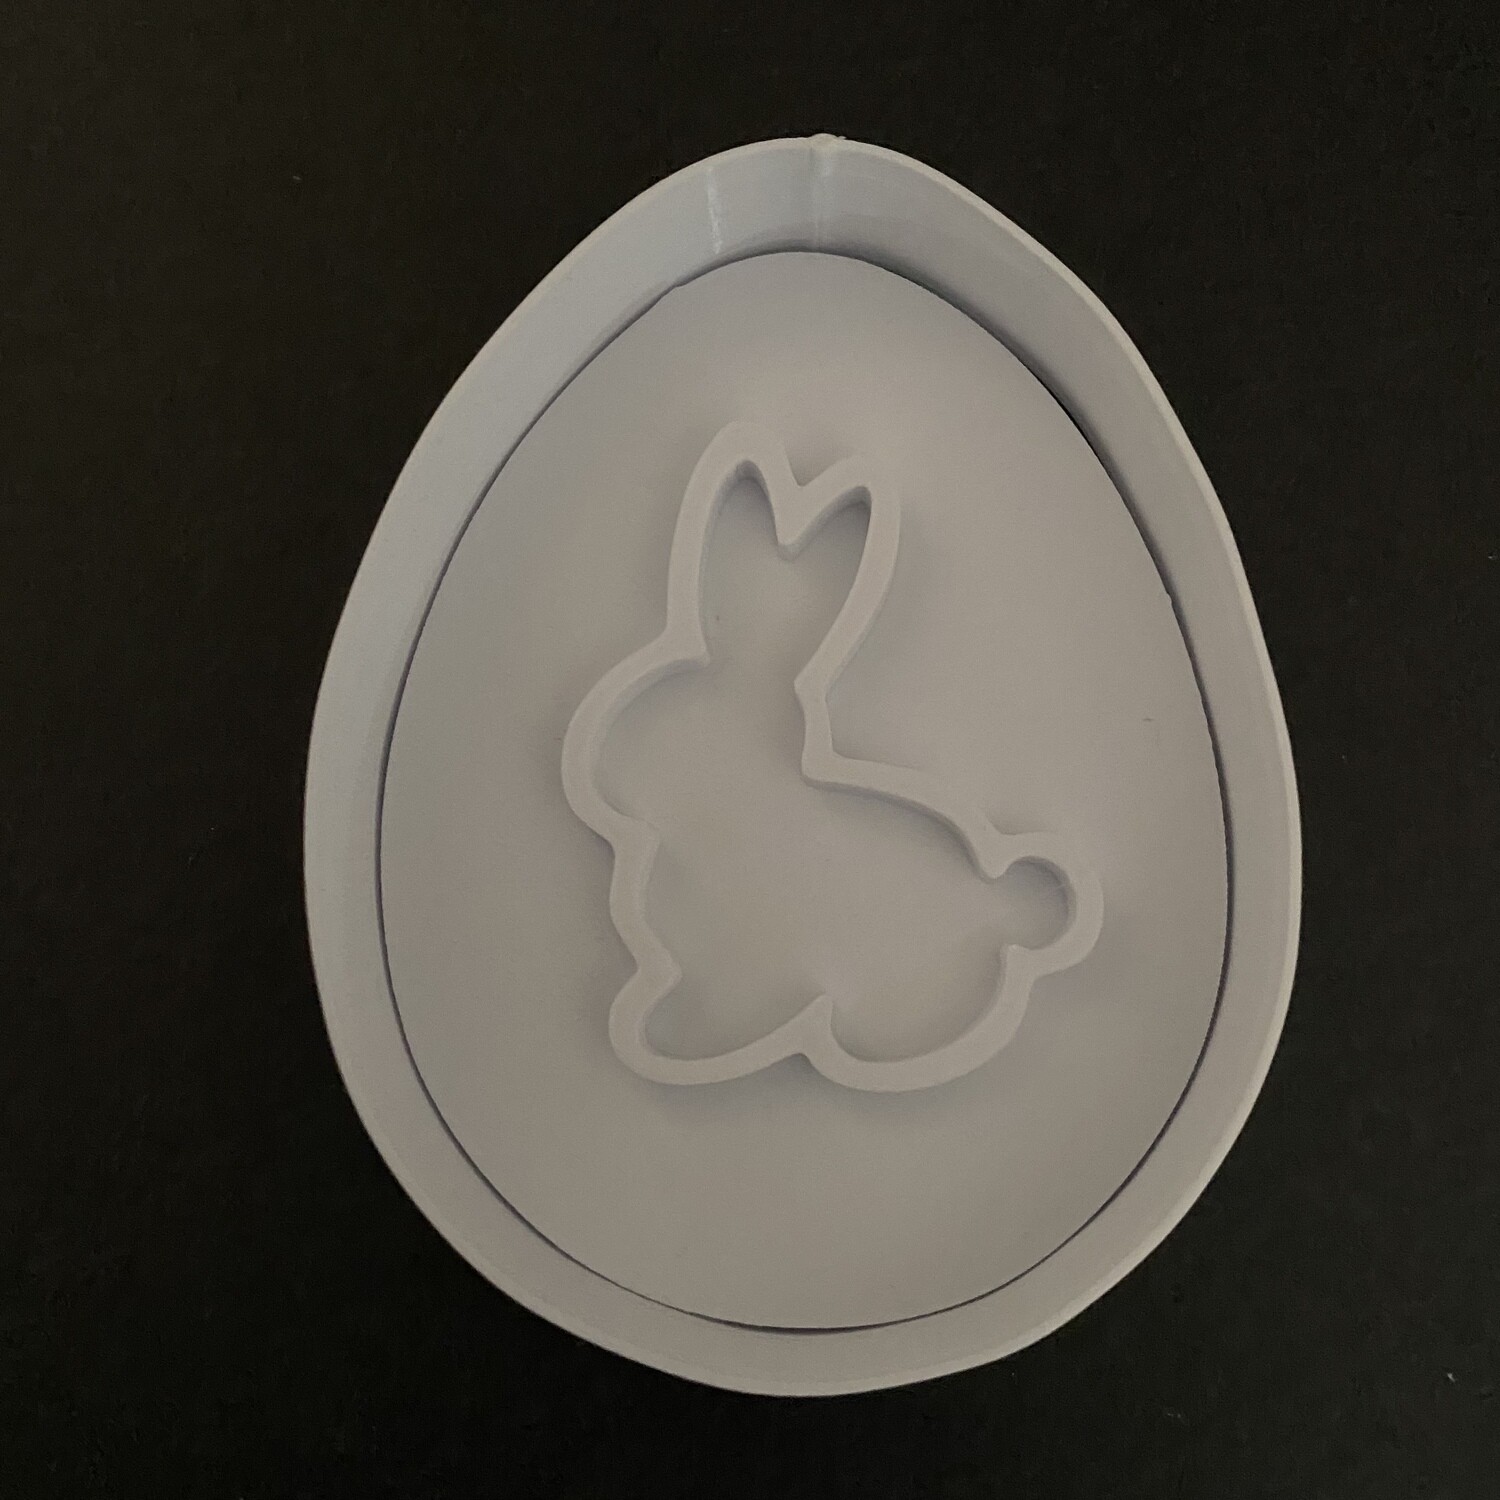 Bunny on egg